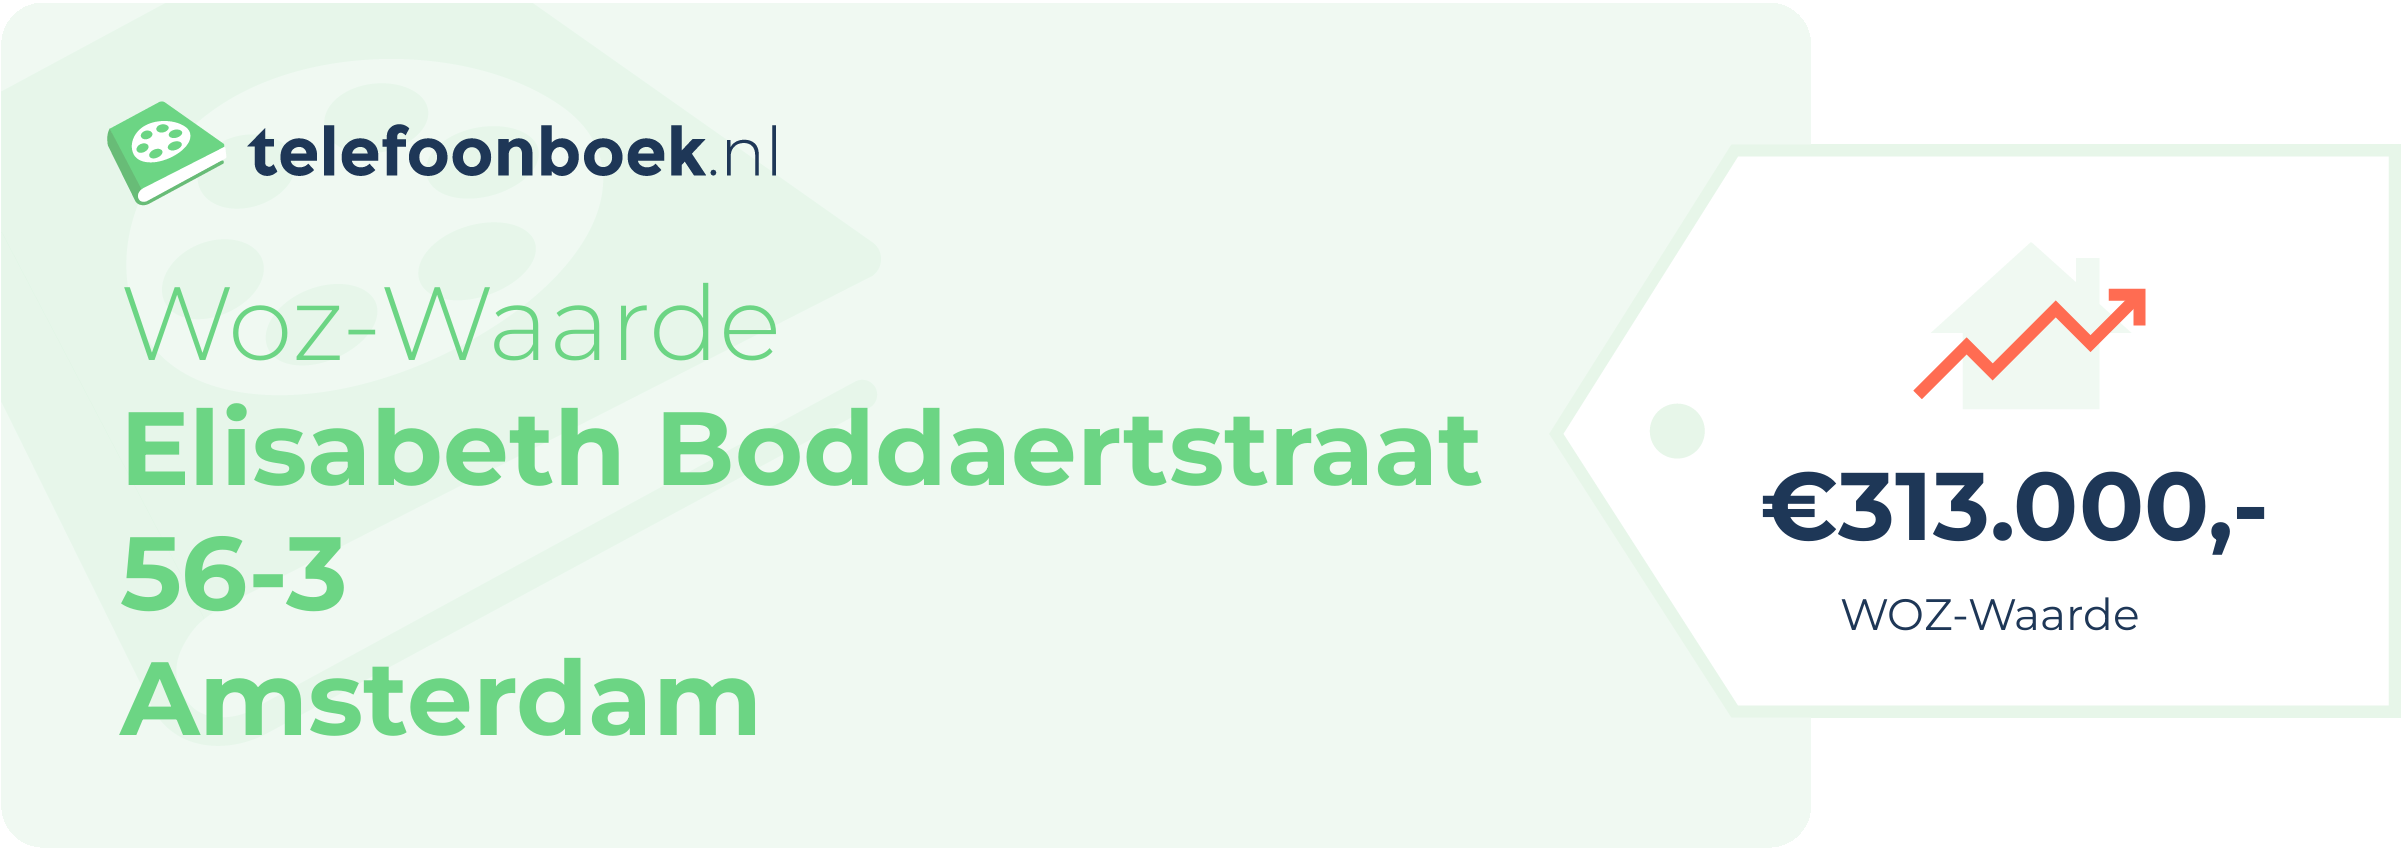 WOZ-waarde Elisabeth Boddaertstraat 56-3 Amsterdam